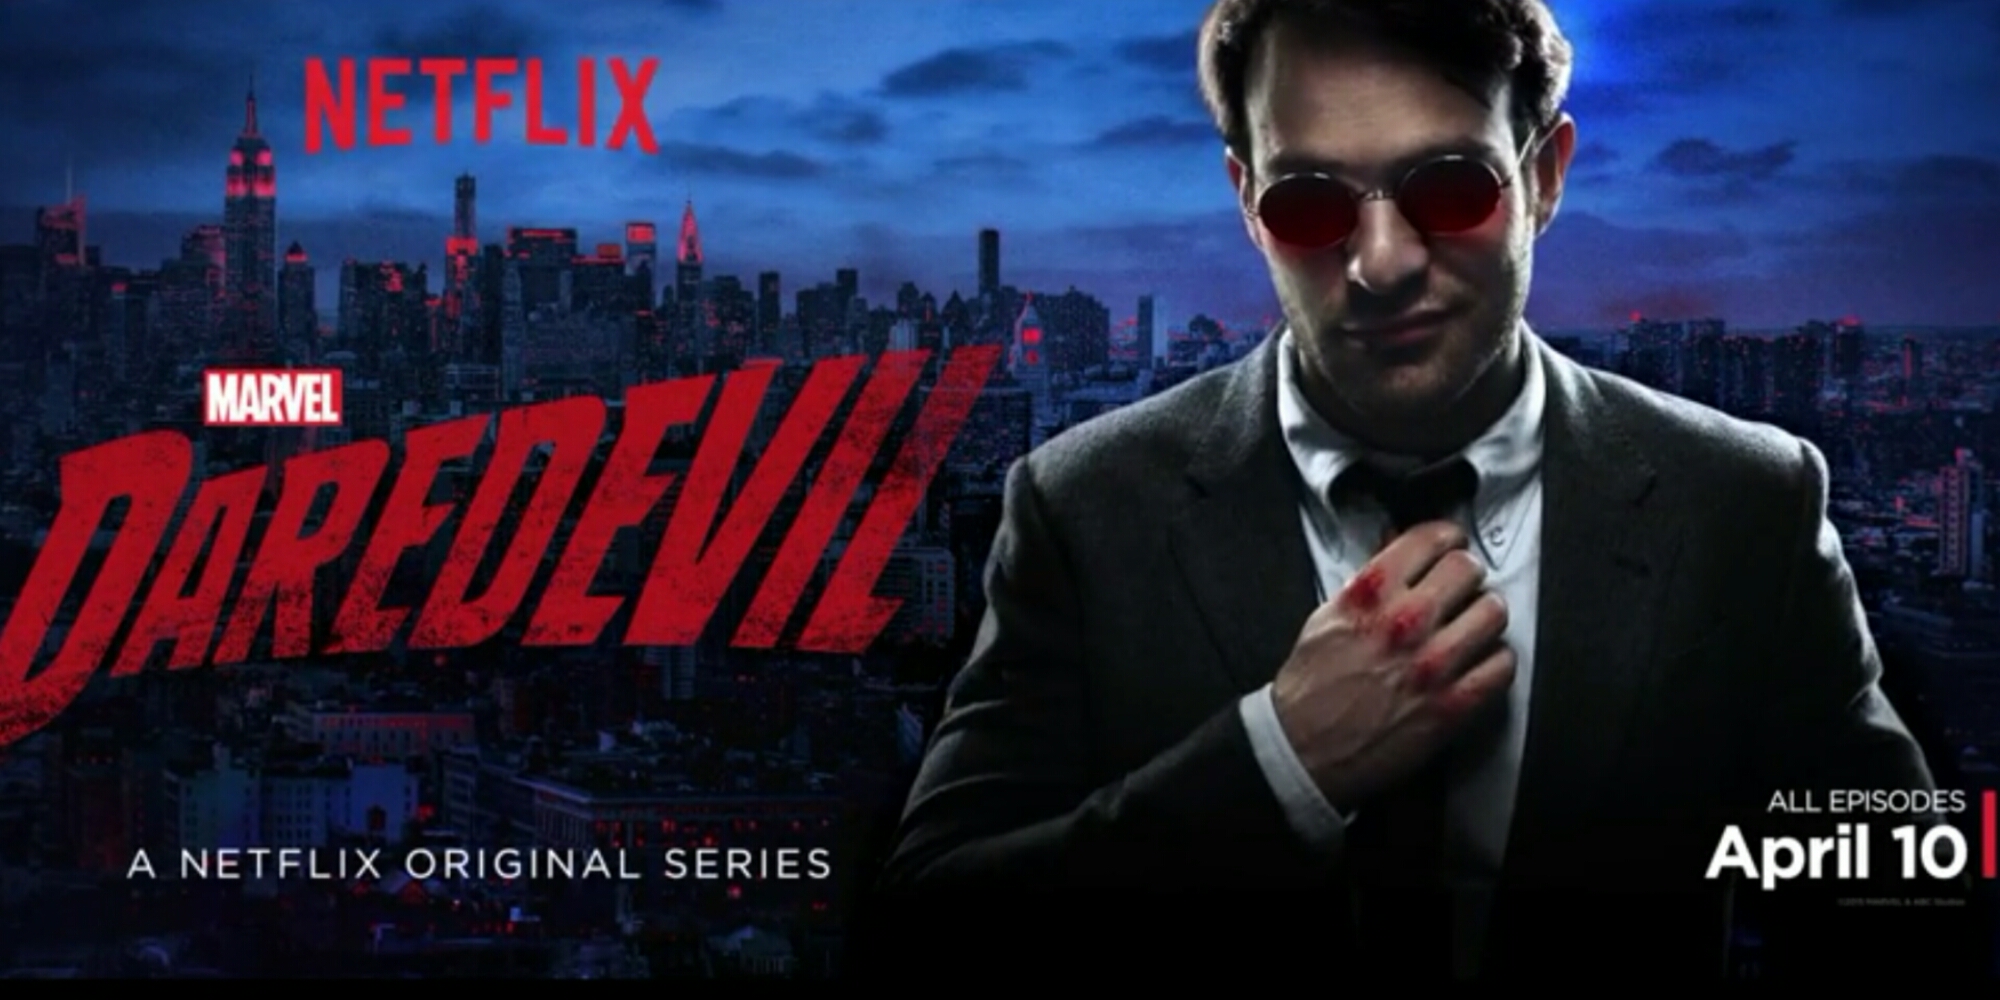 Marvel's 'daredevil' on netflix is worth the watch